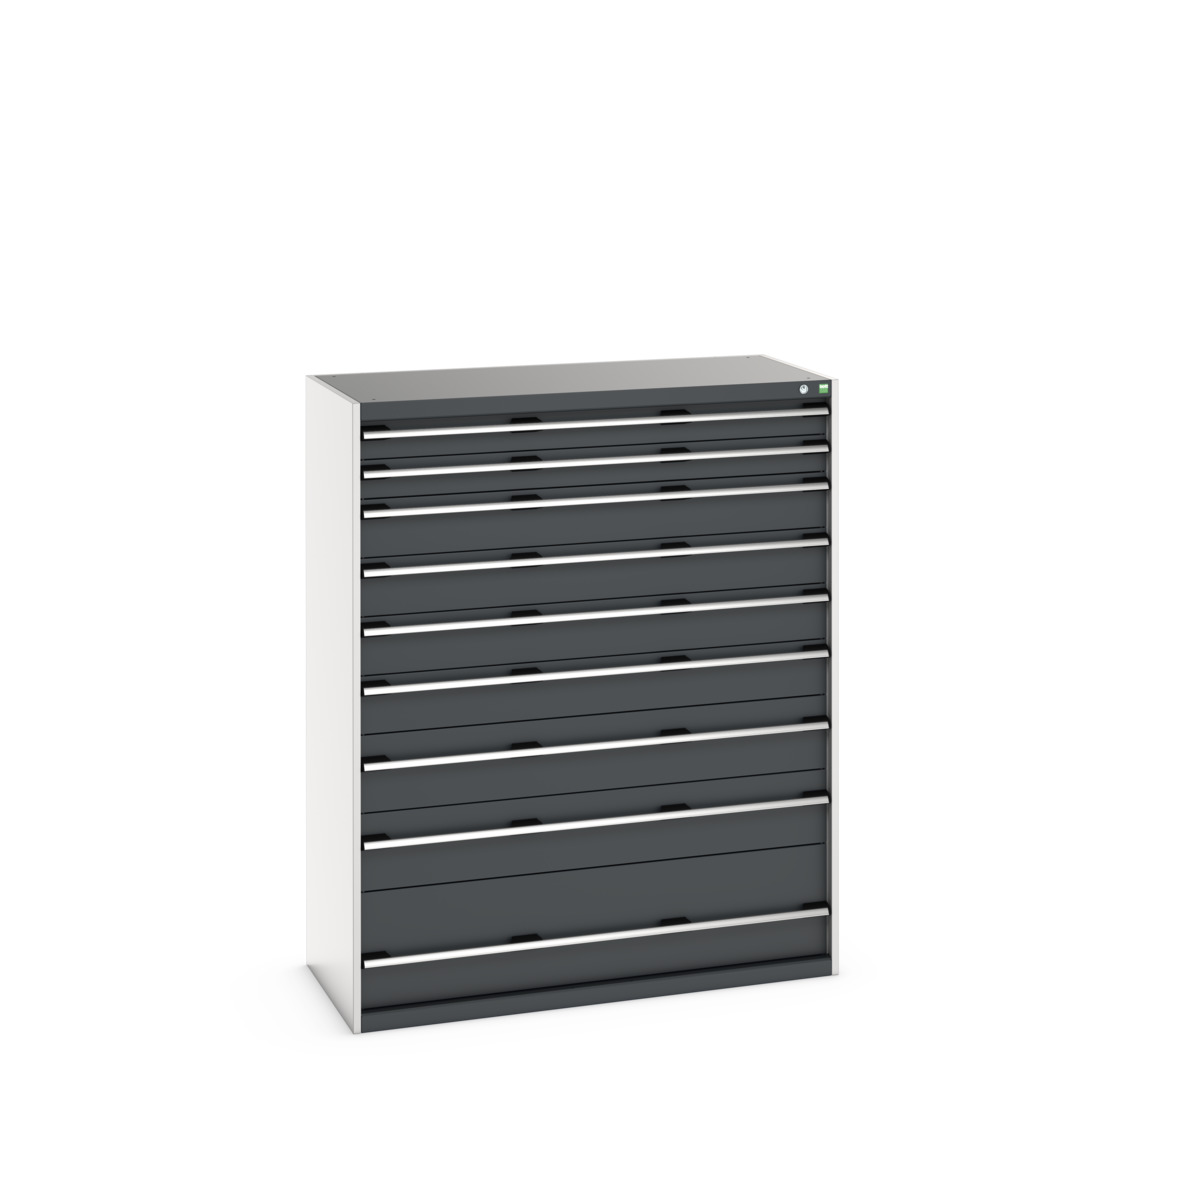 40022133. - cubio drawer cabinet